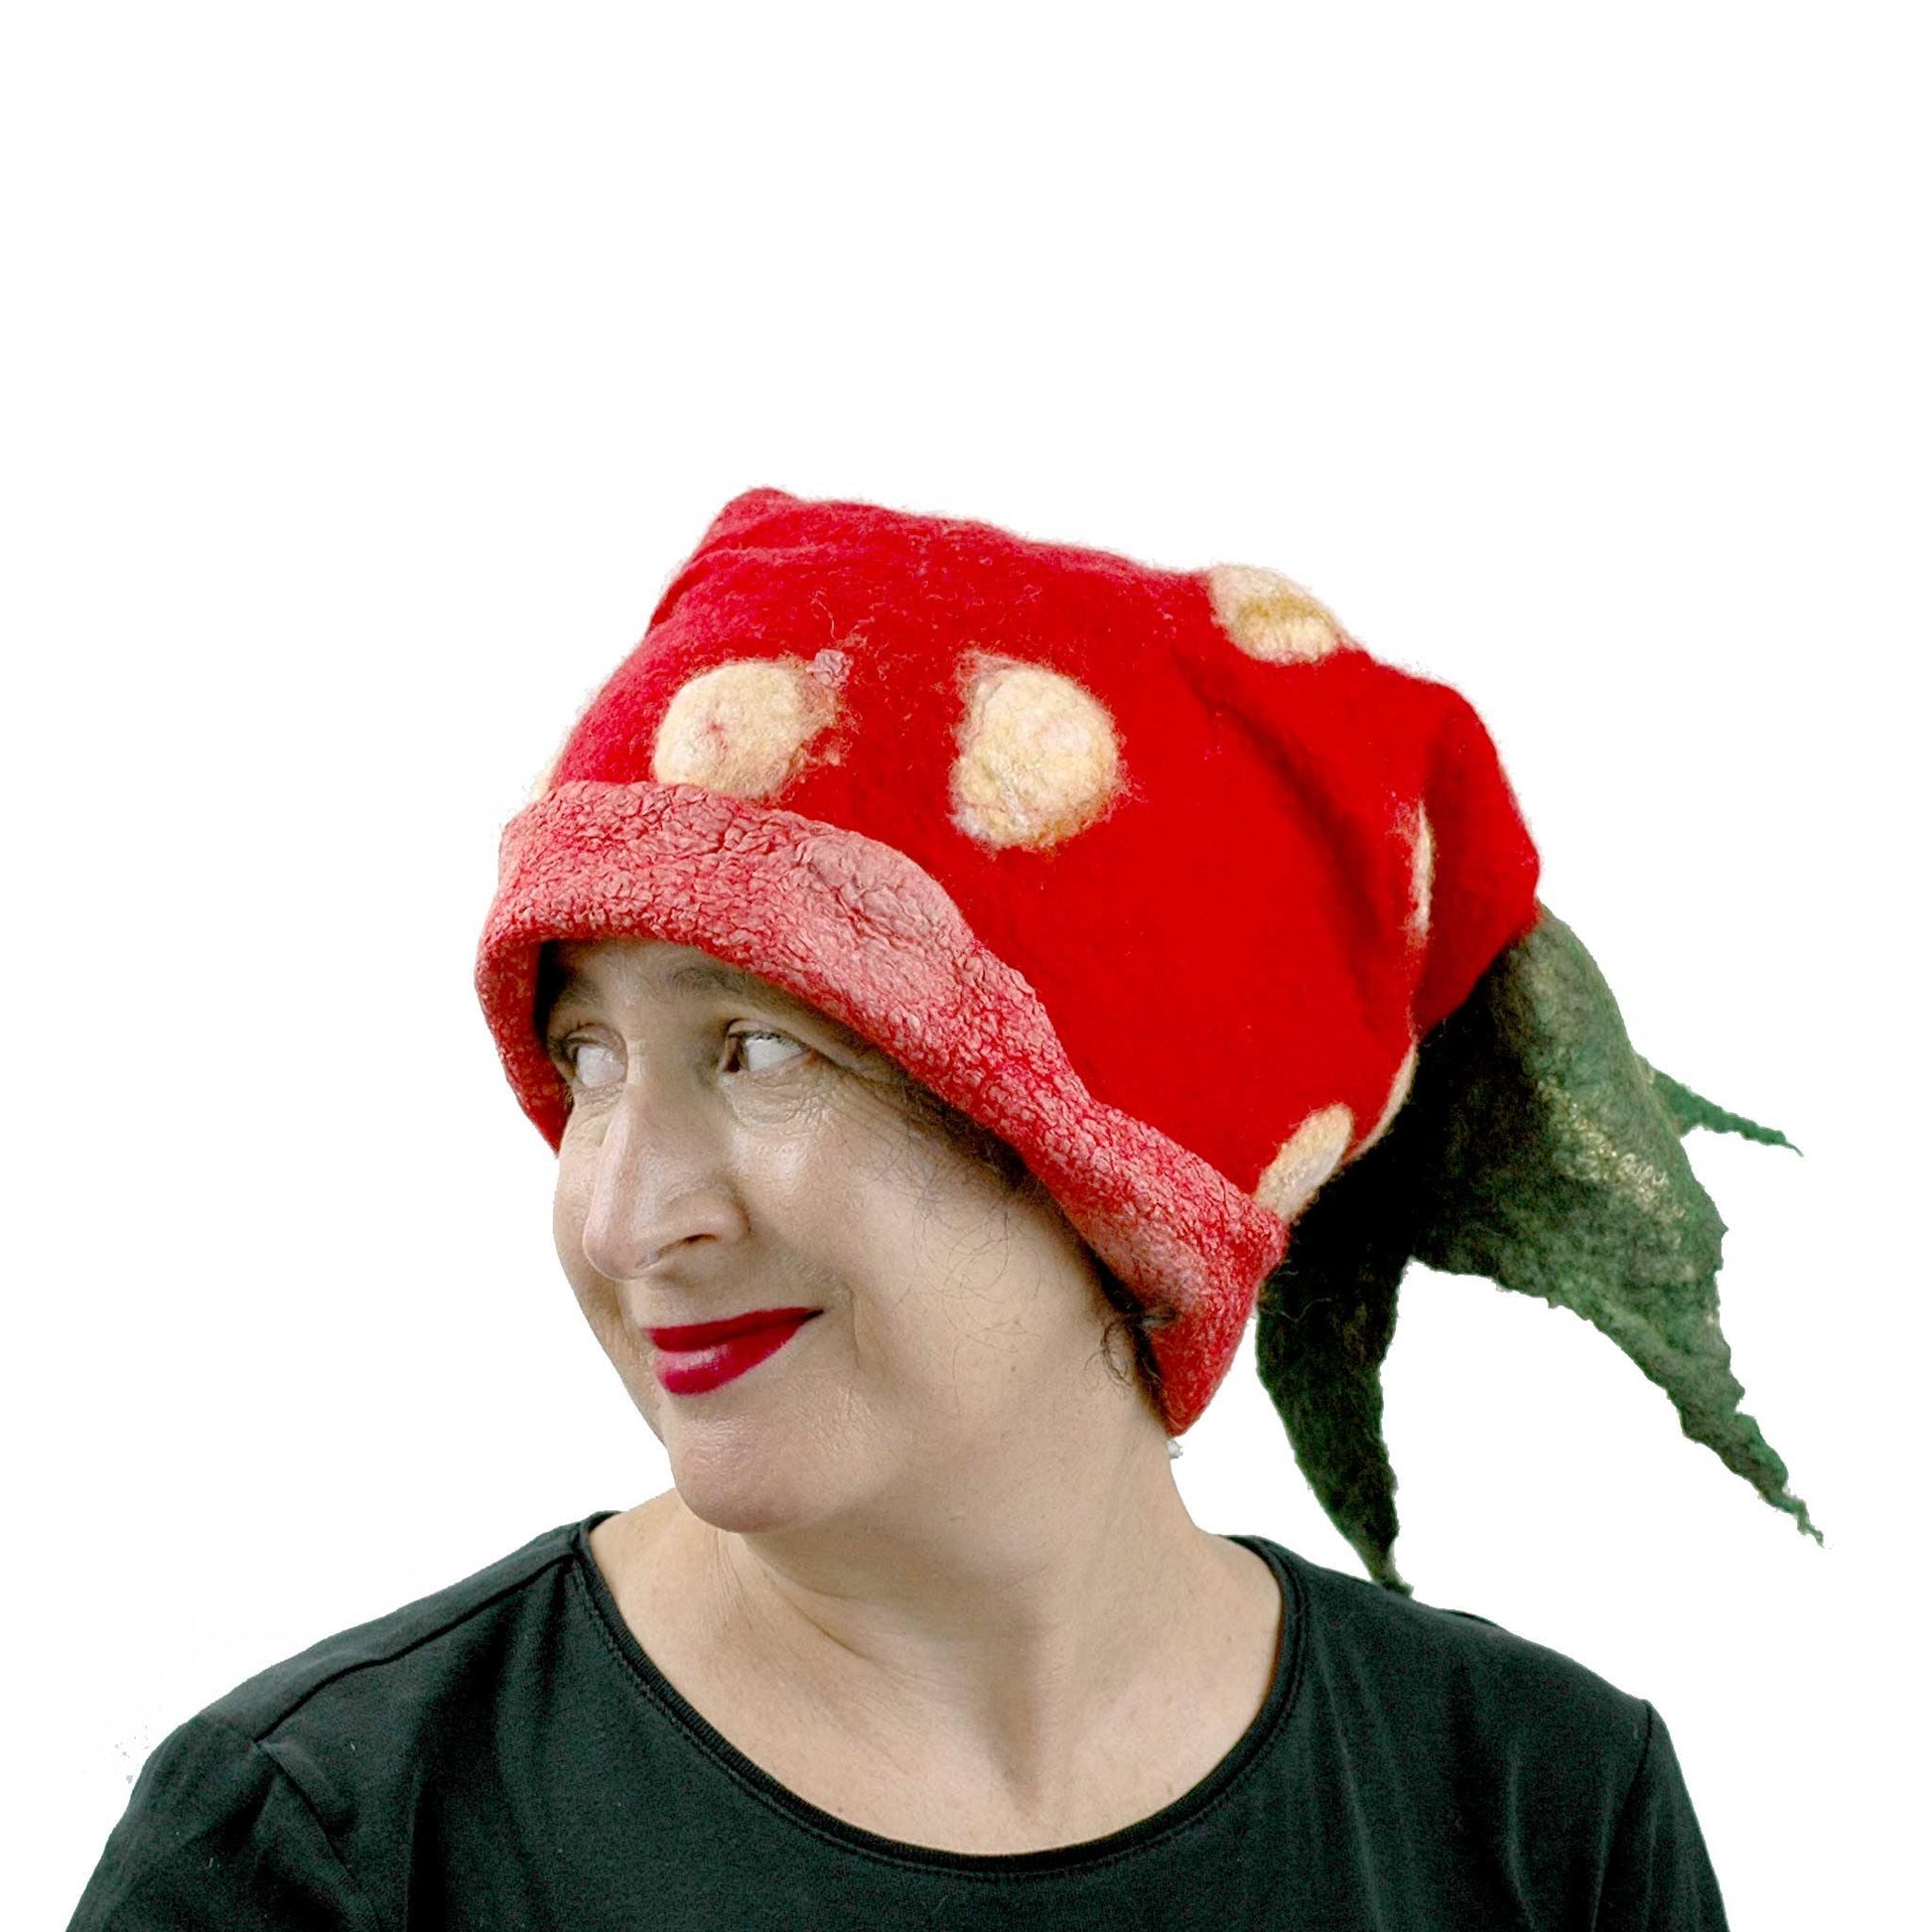 Nunofelted Strawberry Neck Warmer Headscarf worn Jester Style.